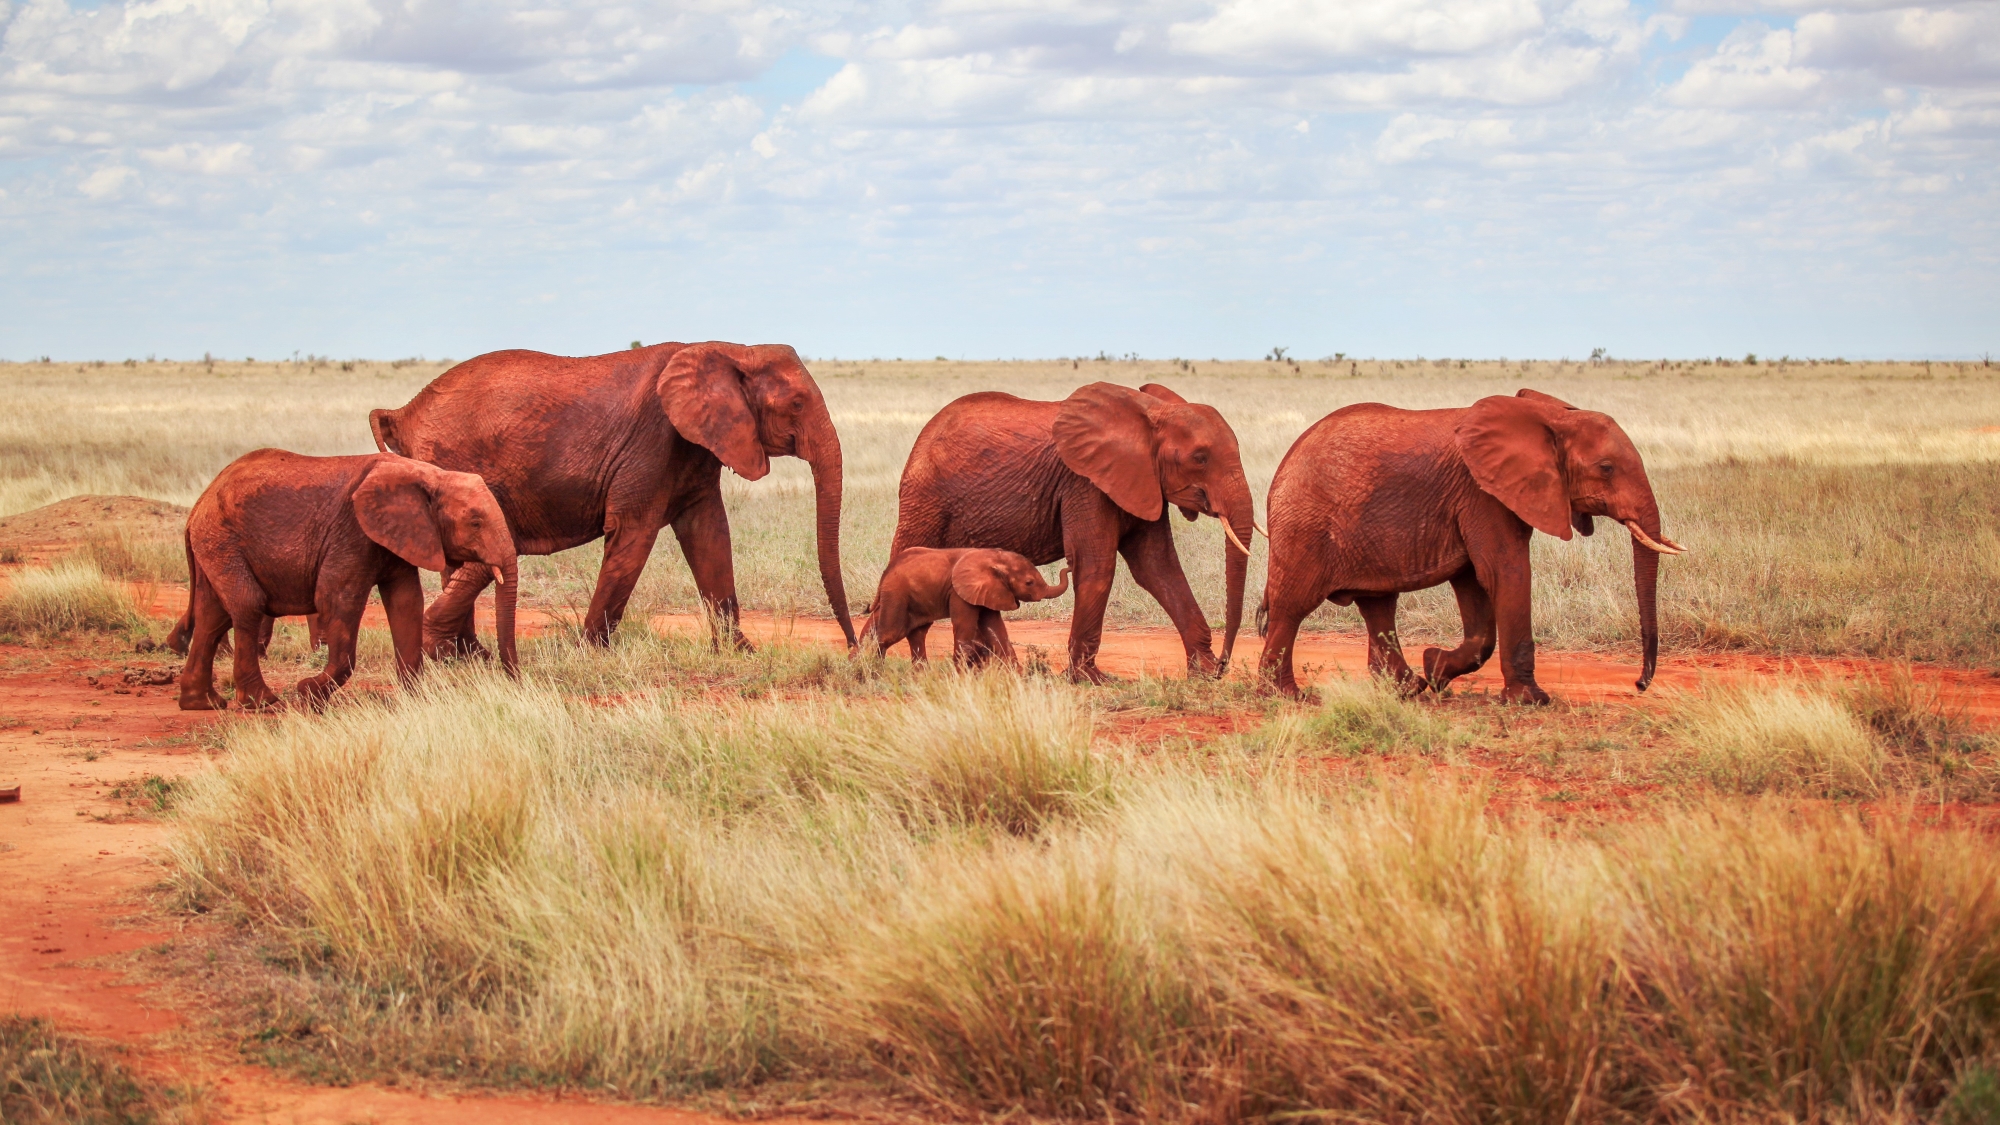 Tsavo-national-park-kenya-red-elephants-208520498.jpg